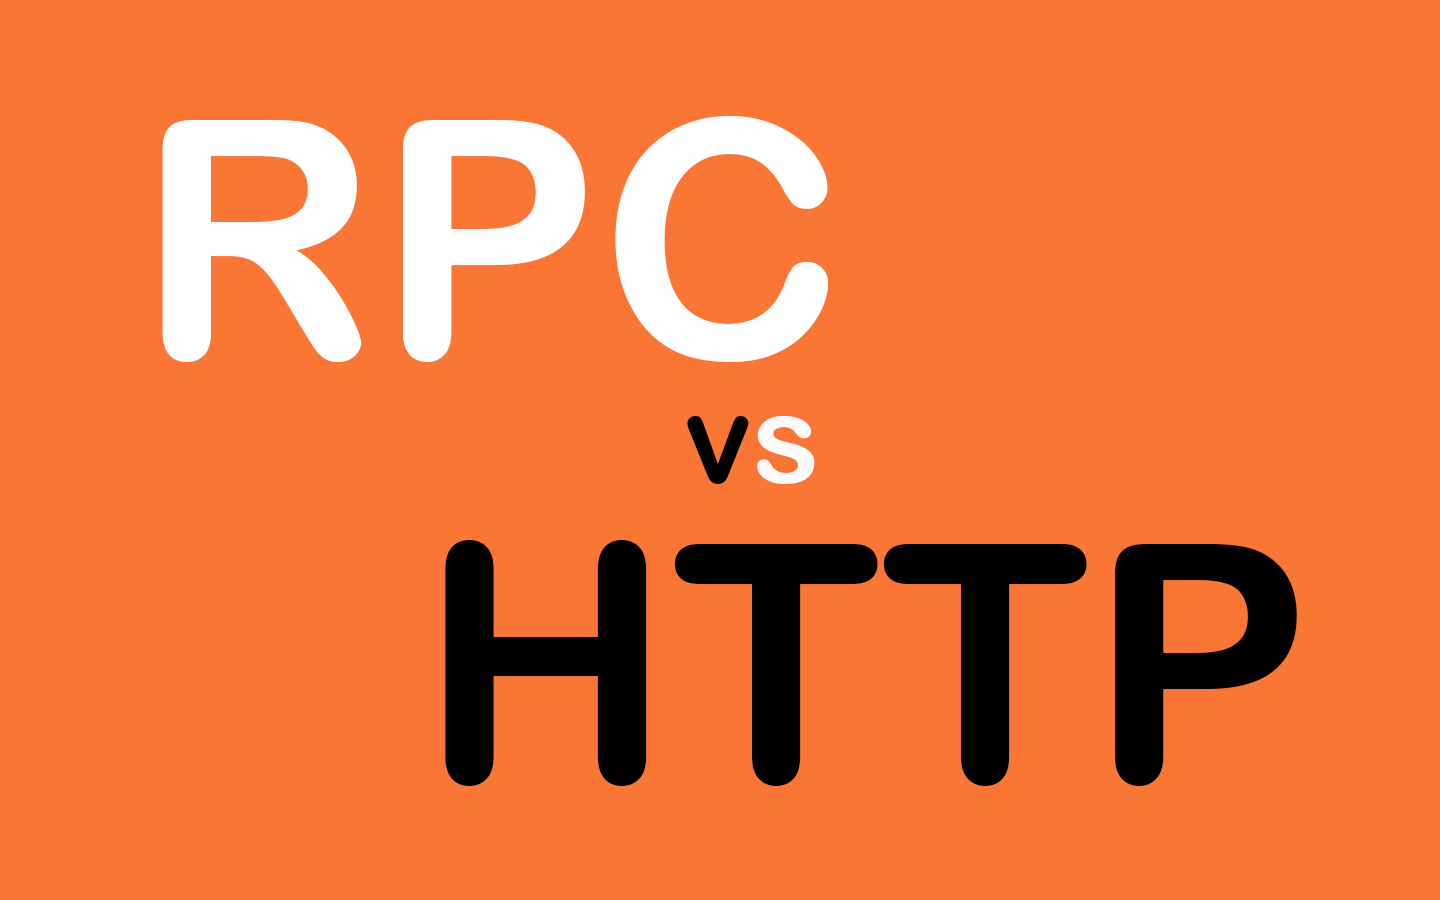 rpc vs http